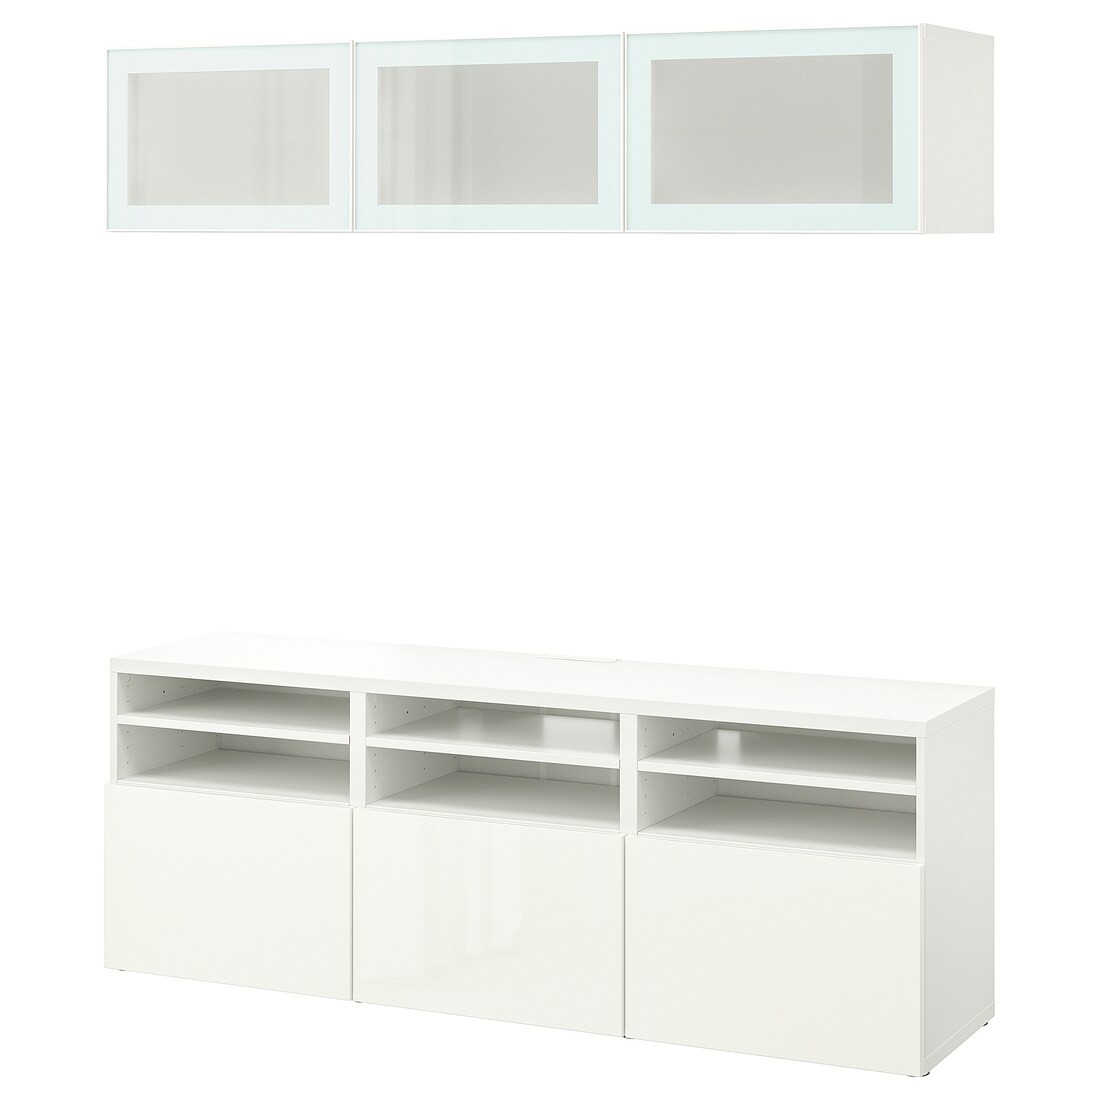 IKEA BESTÅ БЕСТО Комбінація для ТВ / скляні двері, біле / Selsviken глянцеве біле матове скло, 180x42x192 см 19488798 194.887.98